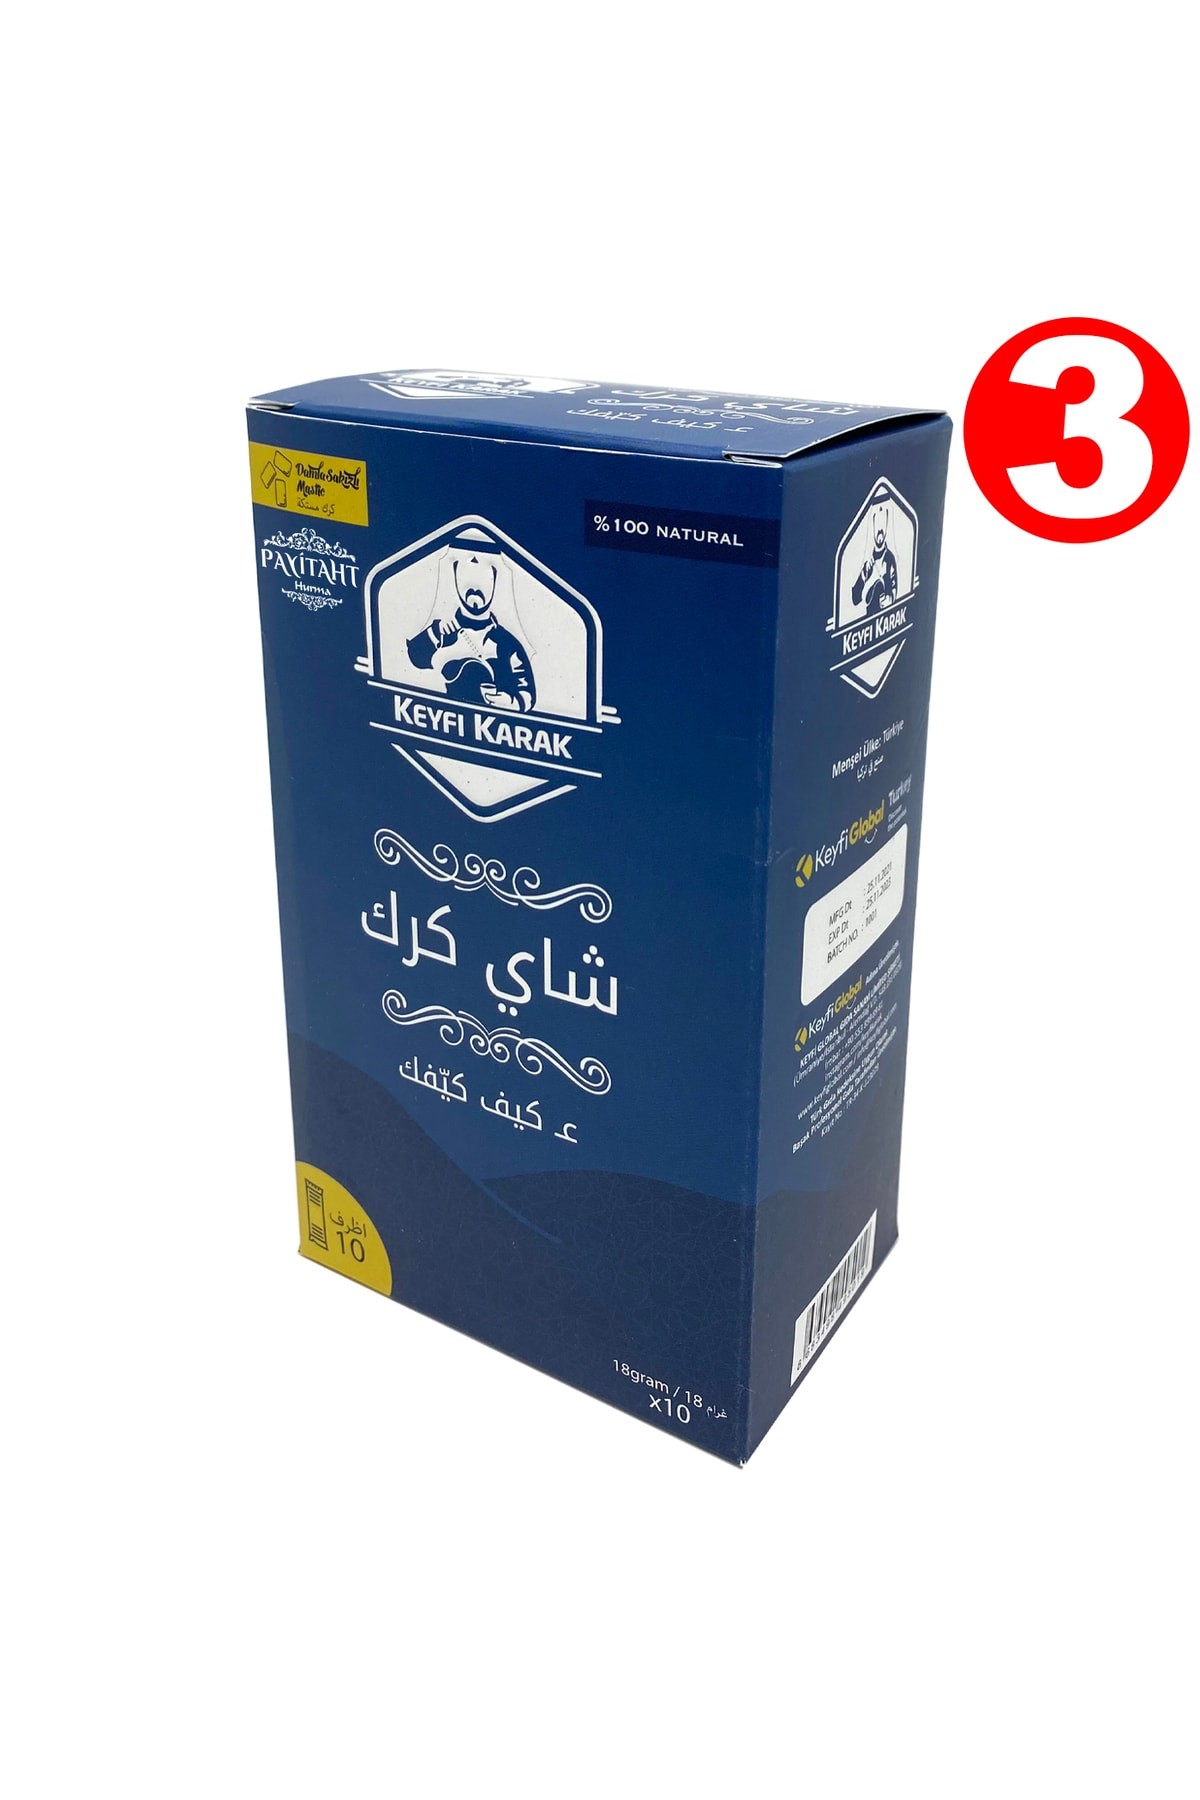 Keyfi Karak Tea Mastic Flavored 10 Stick x 3 Pack